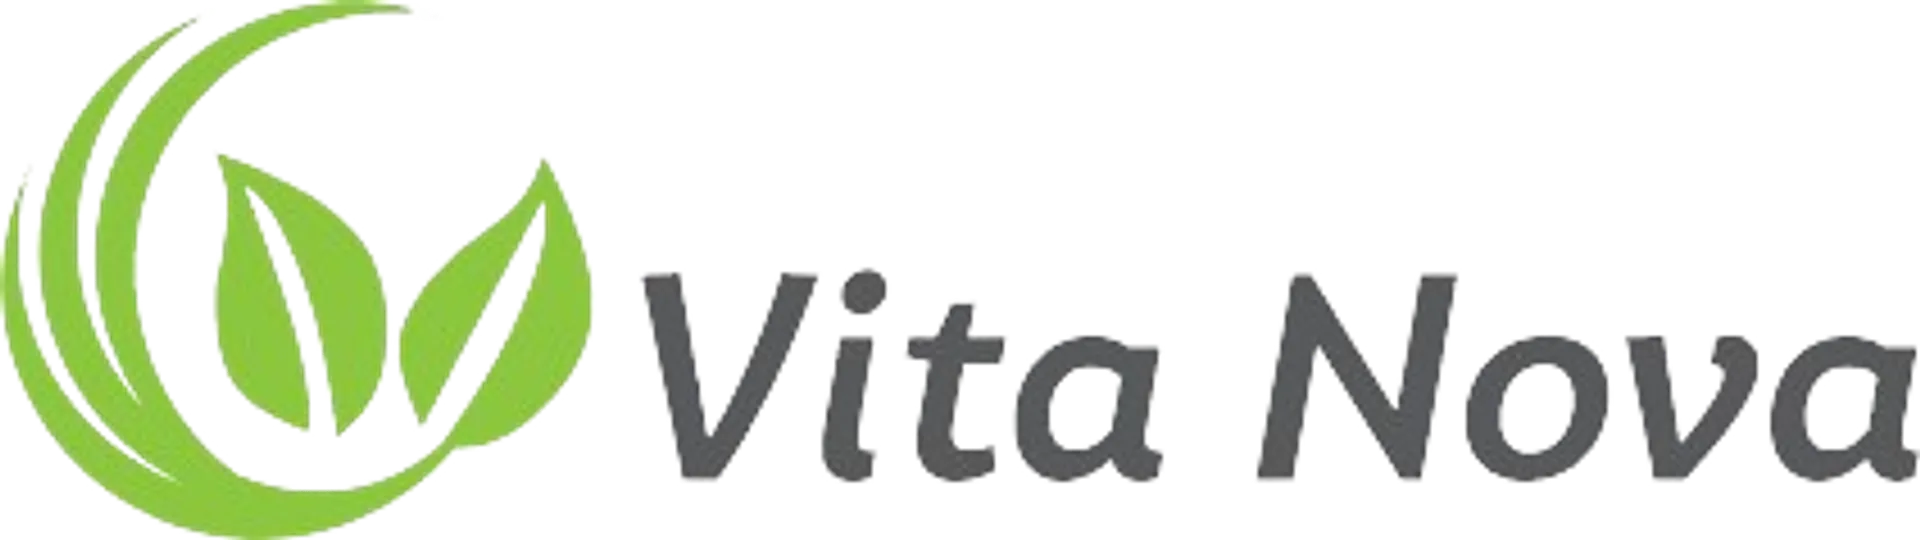 VITA NOVA logo die aktuell Prospekt